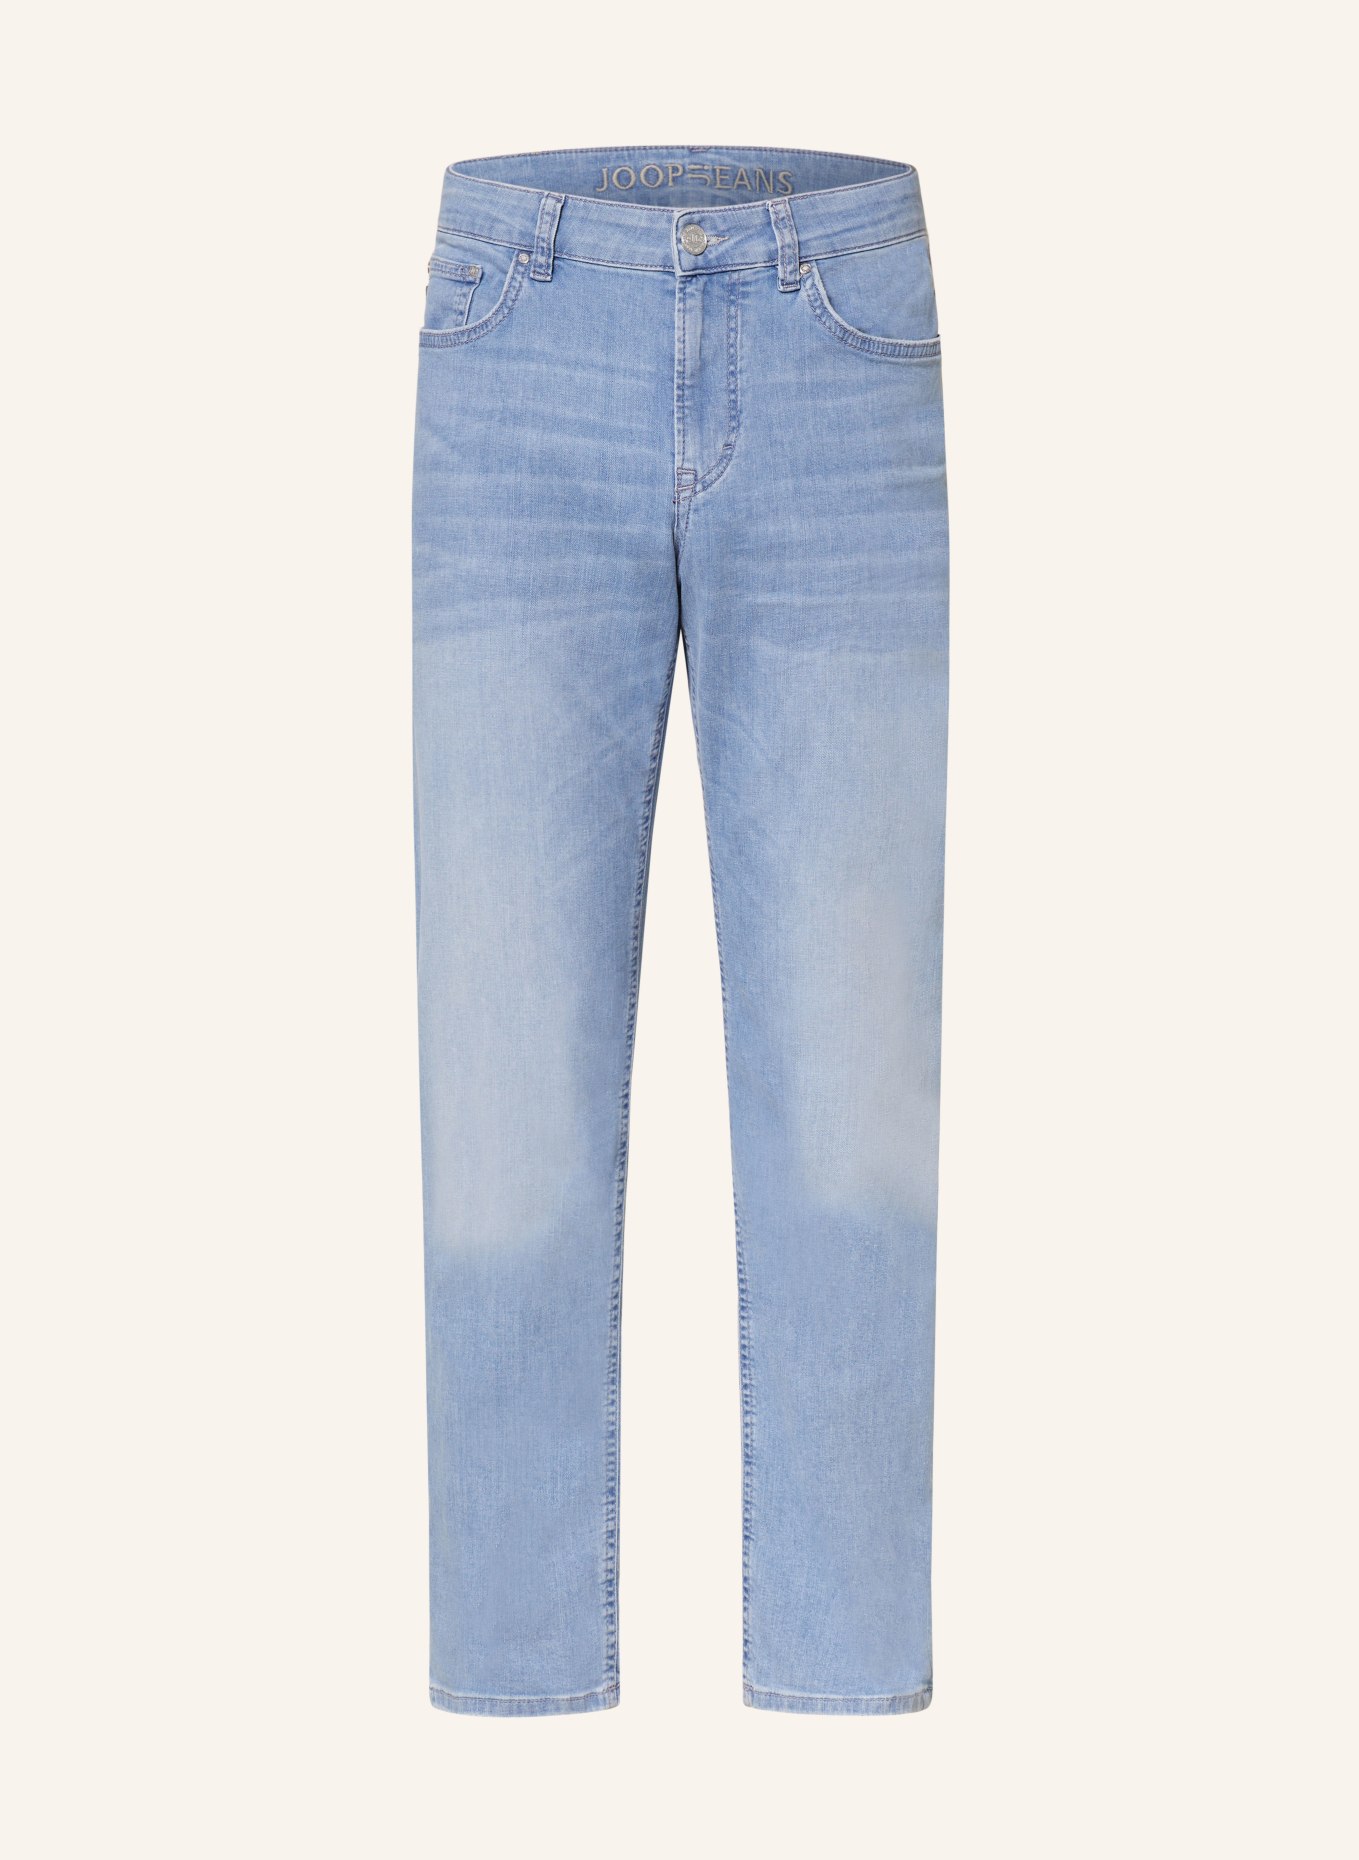 JOOP! JEANS Jeans MITCH Modern Fit, Farbe: 445 TurquoiseAqua              445 (Bild 1)